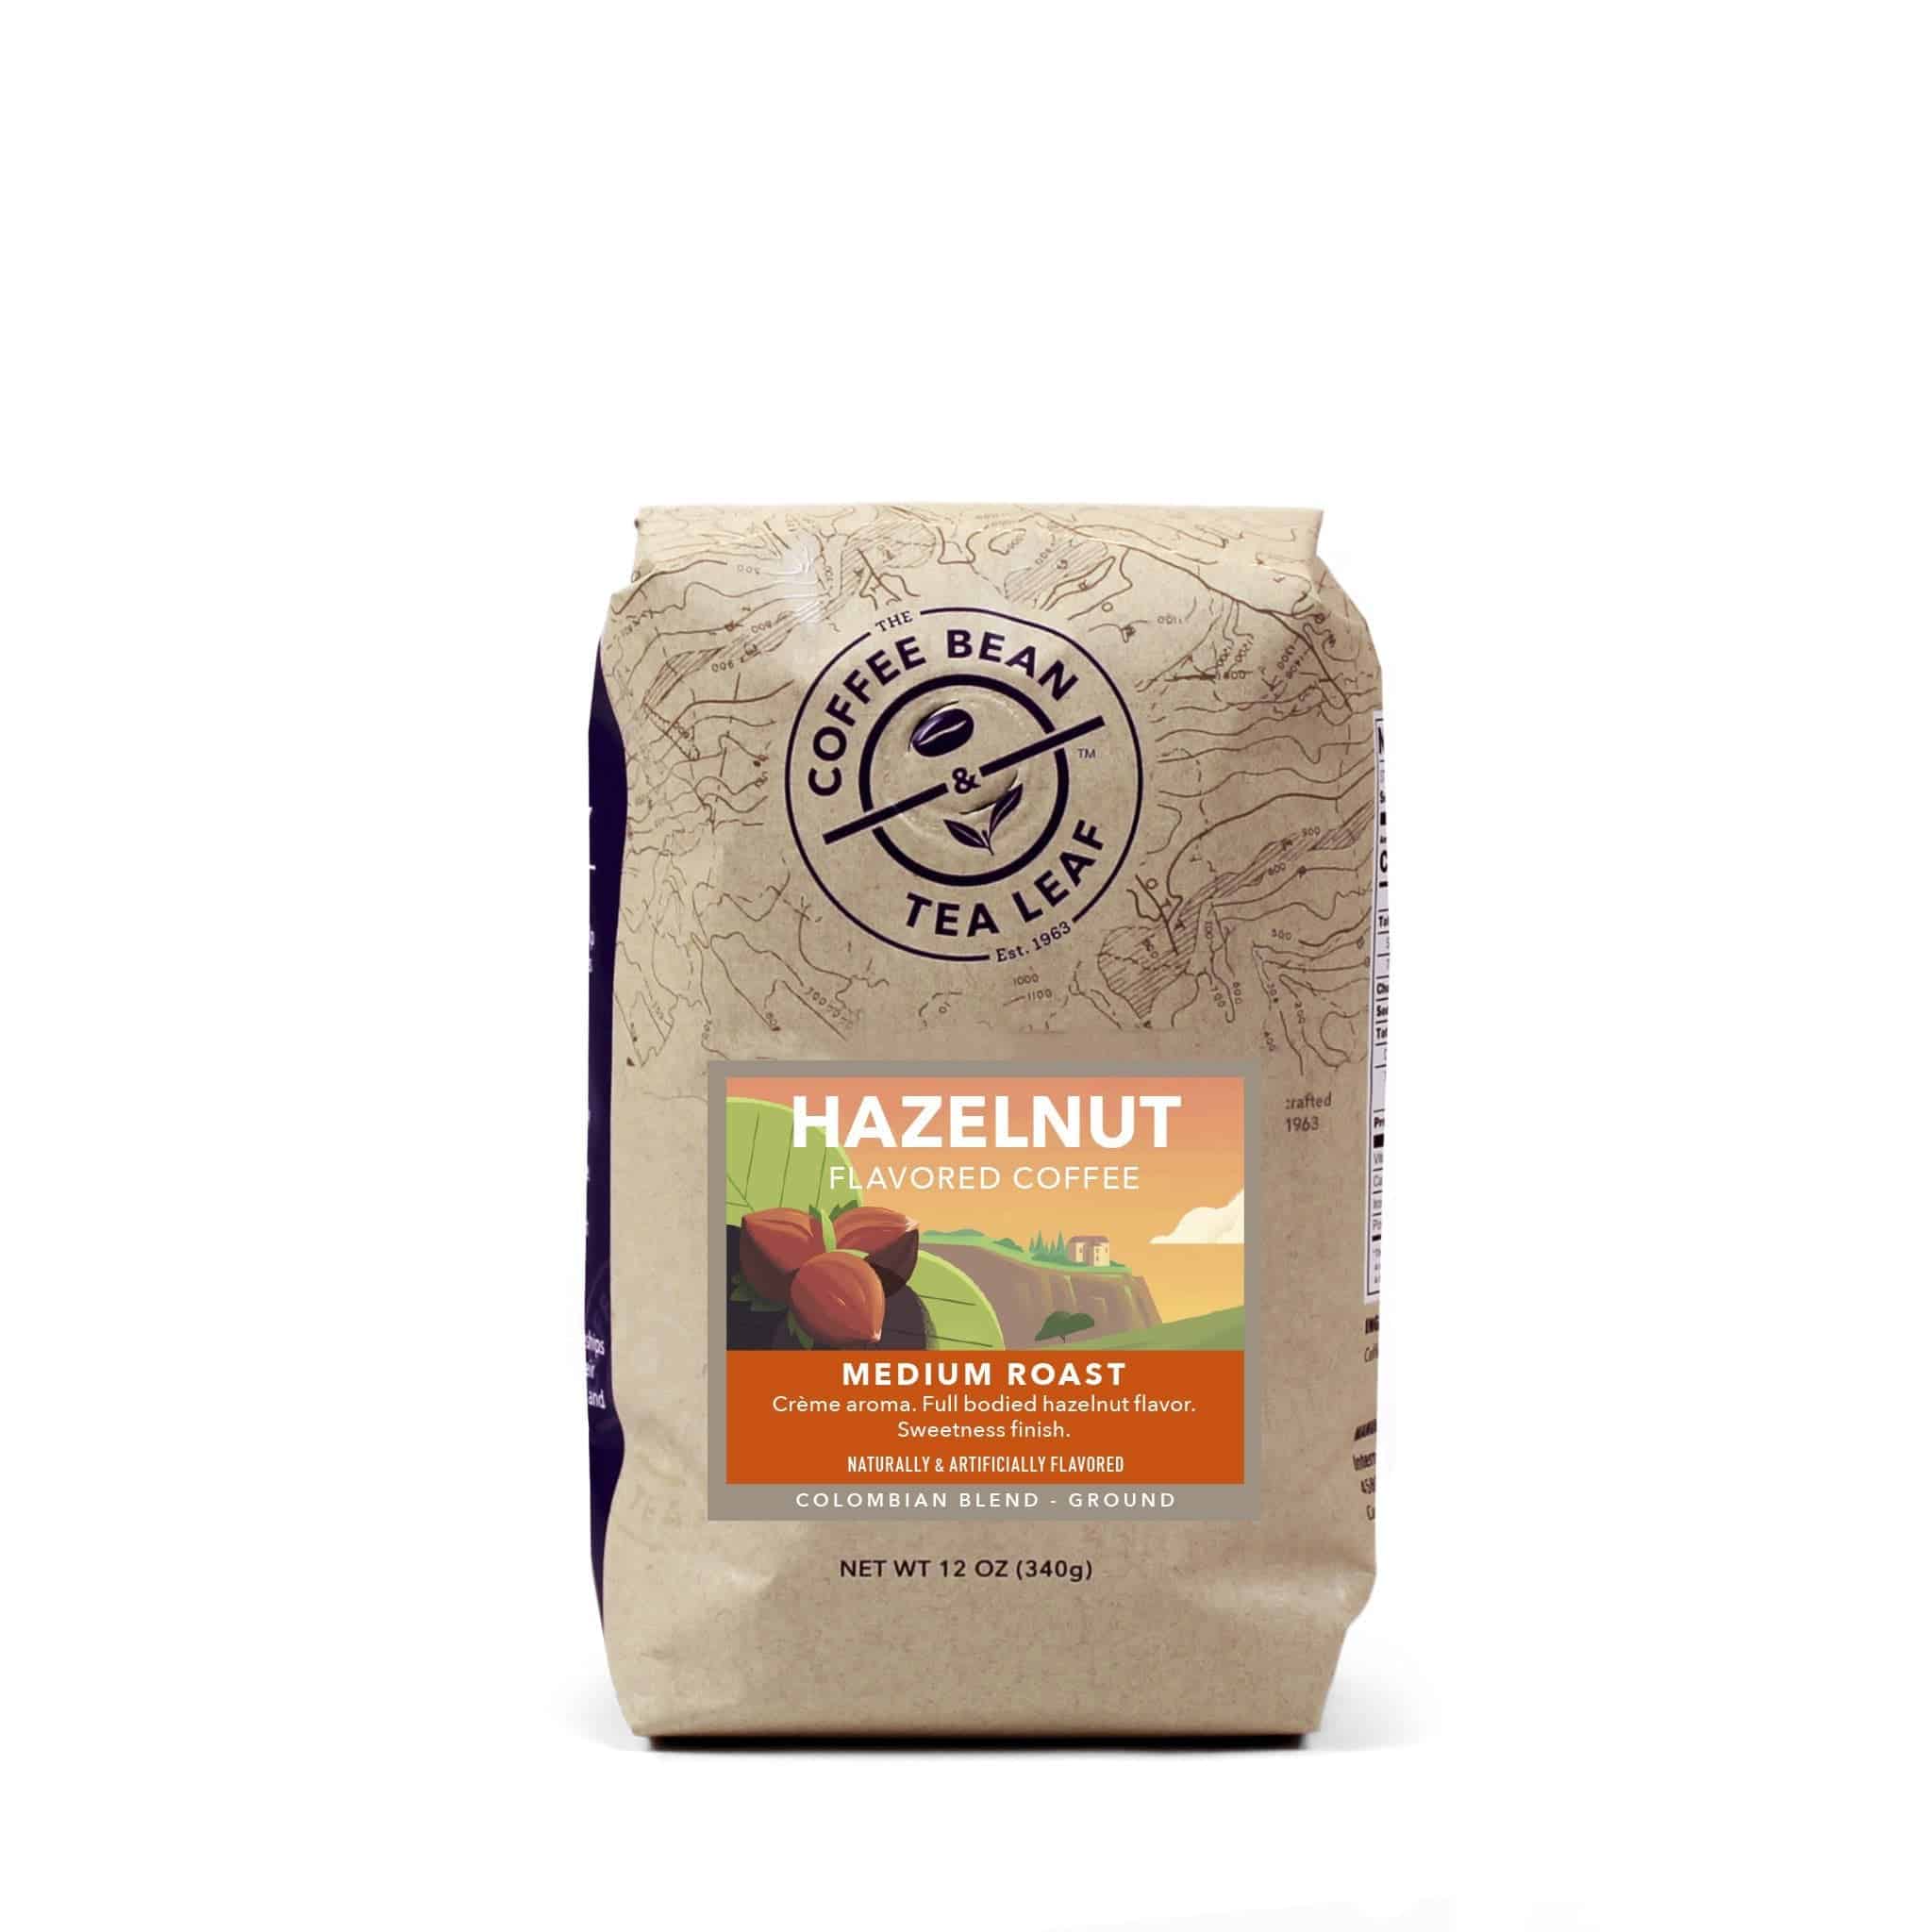 Natural Hazelnut, Flavored Espresso Pods